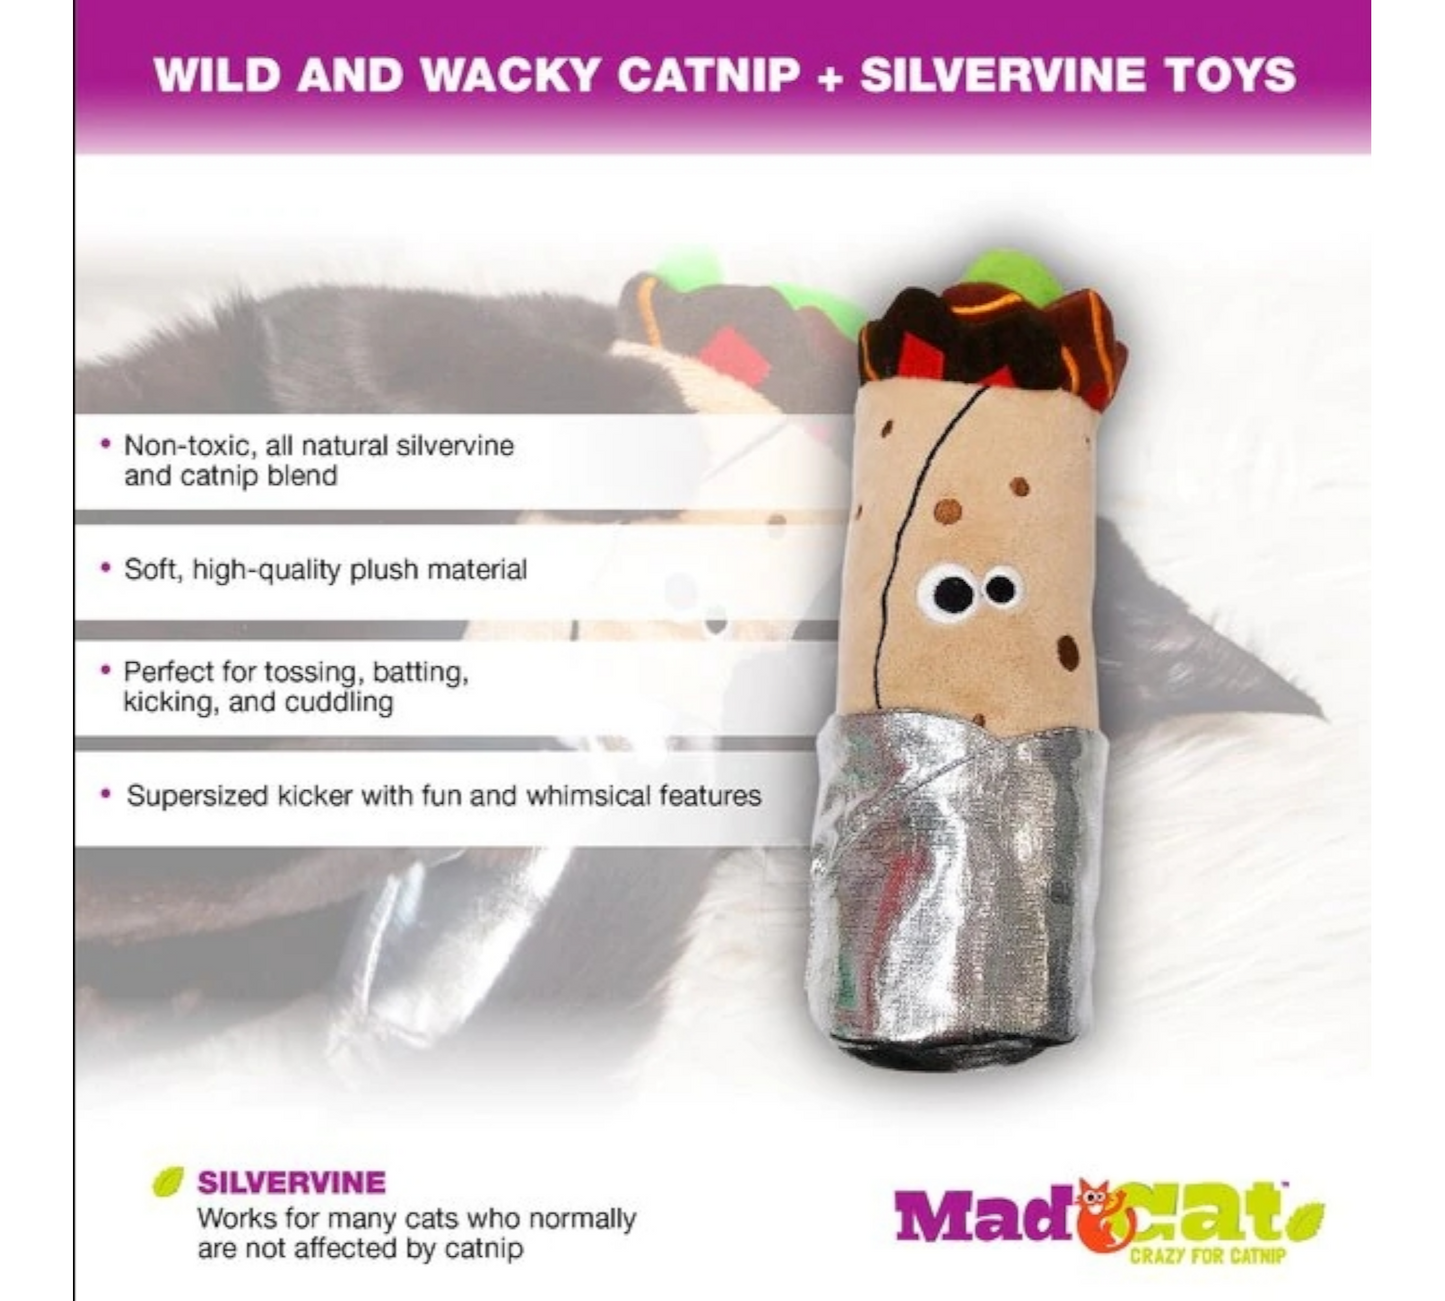 Canine's World Catnip Toys Mad Cat Big Burrito Kicker Catnip & Silvervine Cat Toy Mad Cat